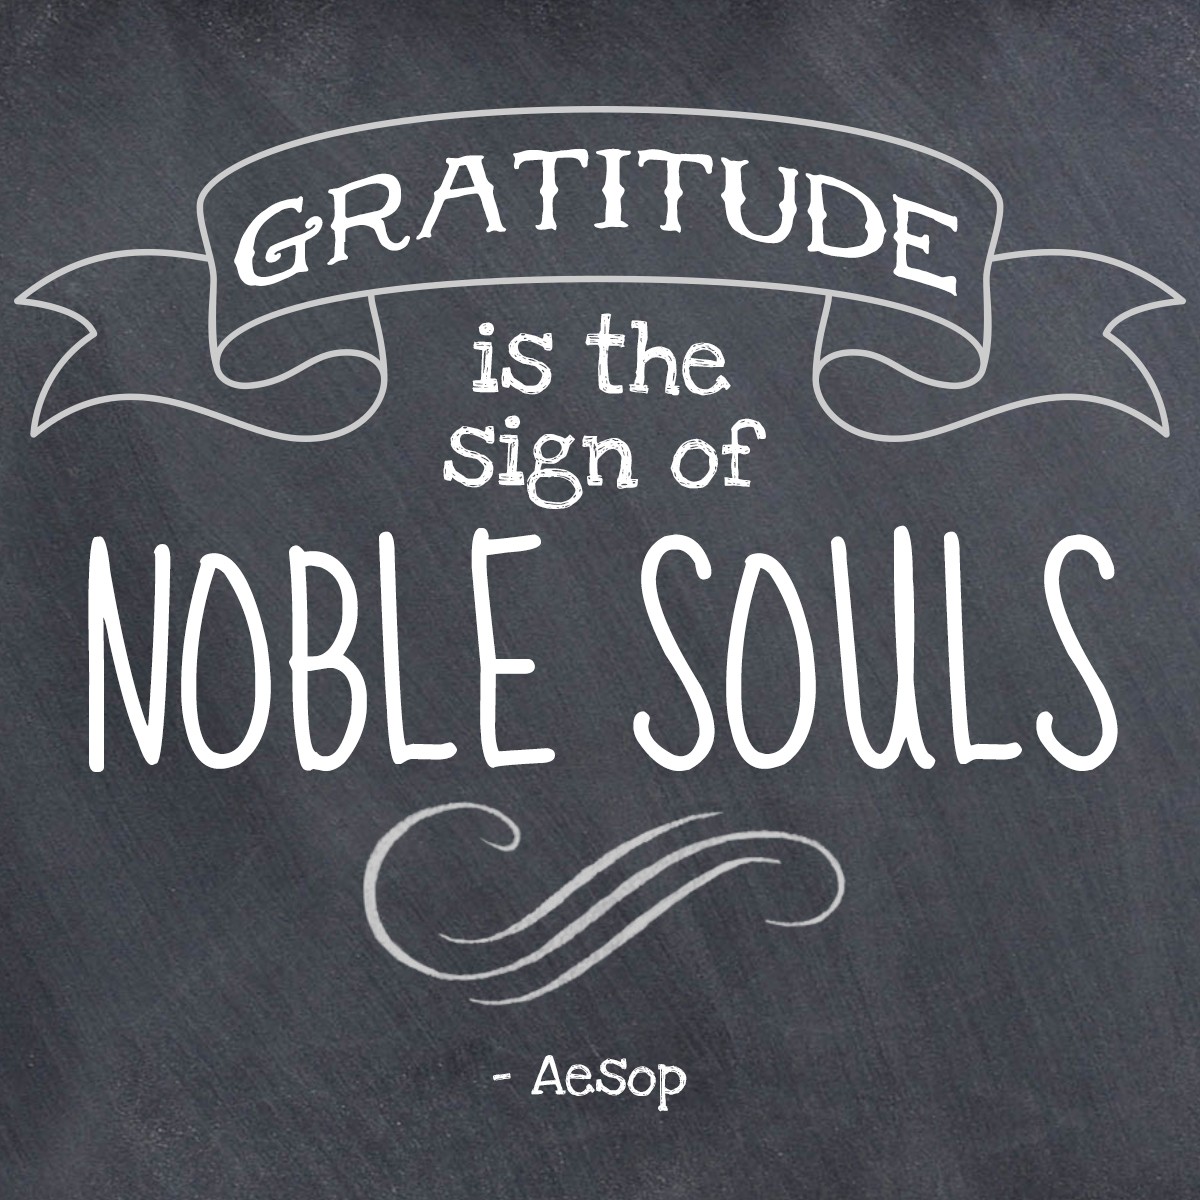 Gratitude is the sign of noble souls. - Aesop | MakeItGrateful.com